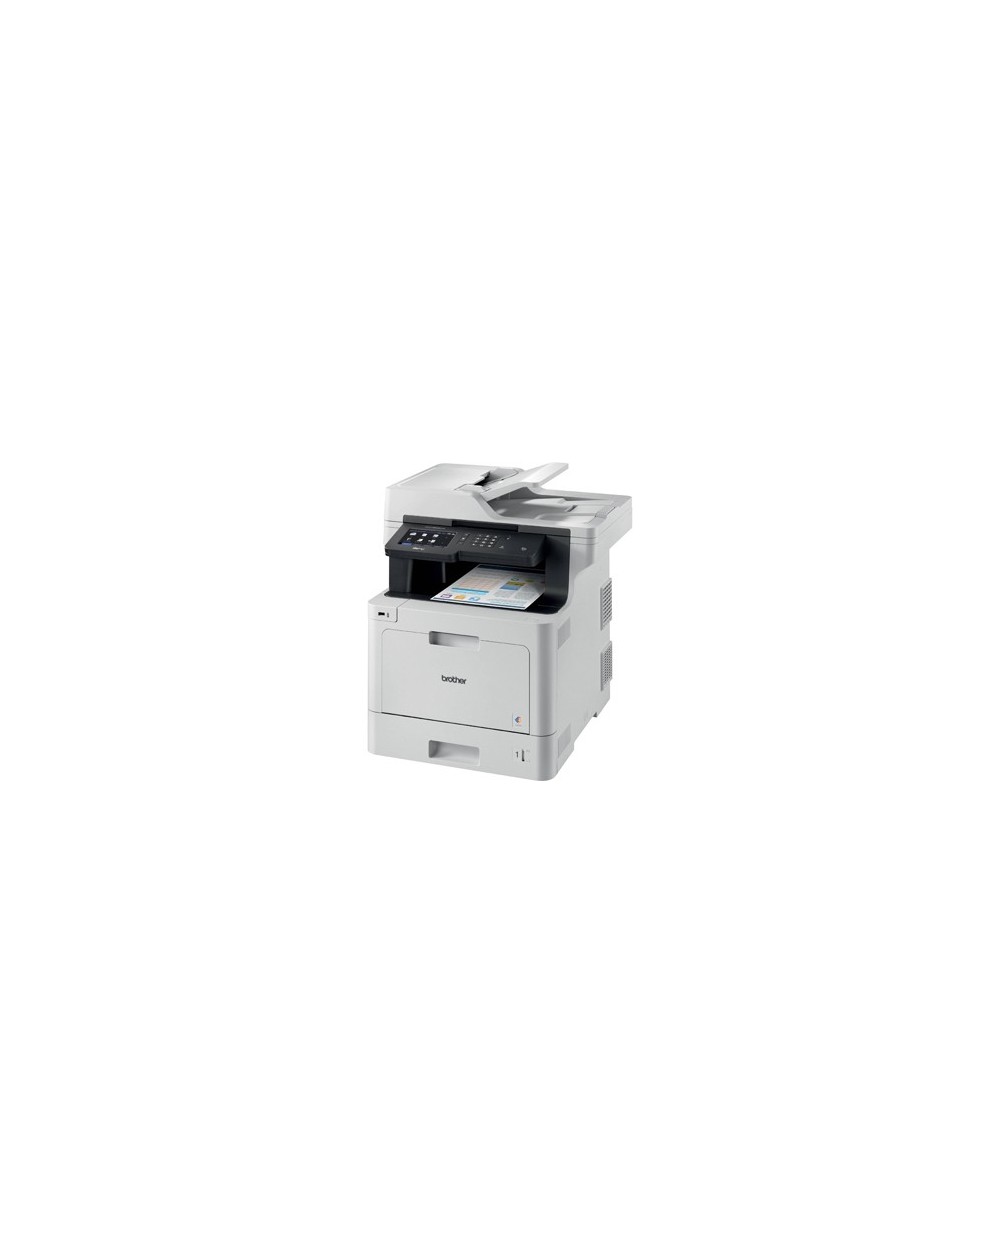 Equipo multifuncion brother mfc l8900cdw laser color 31 ppm 31 ppm copiadora escaner impresora fax bandeja